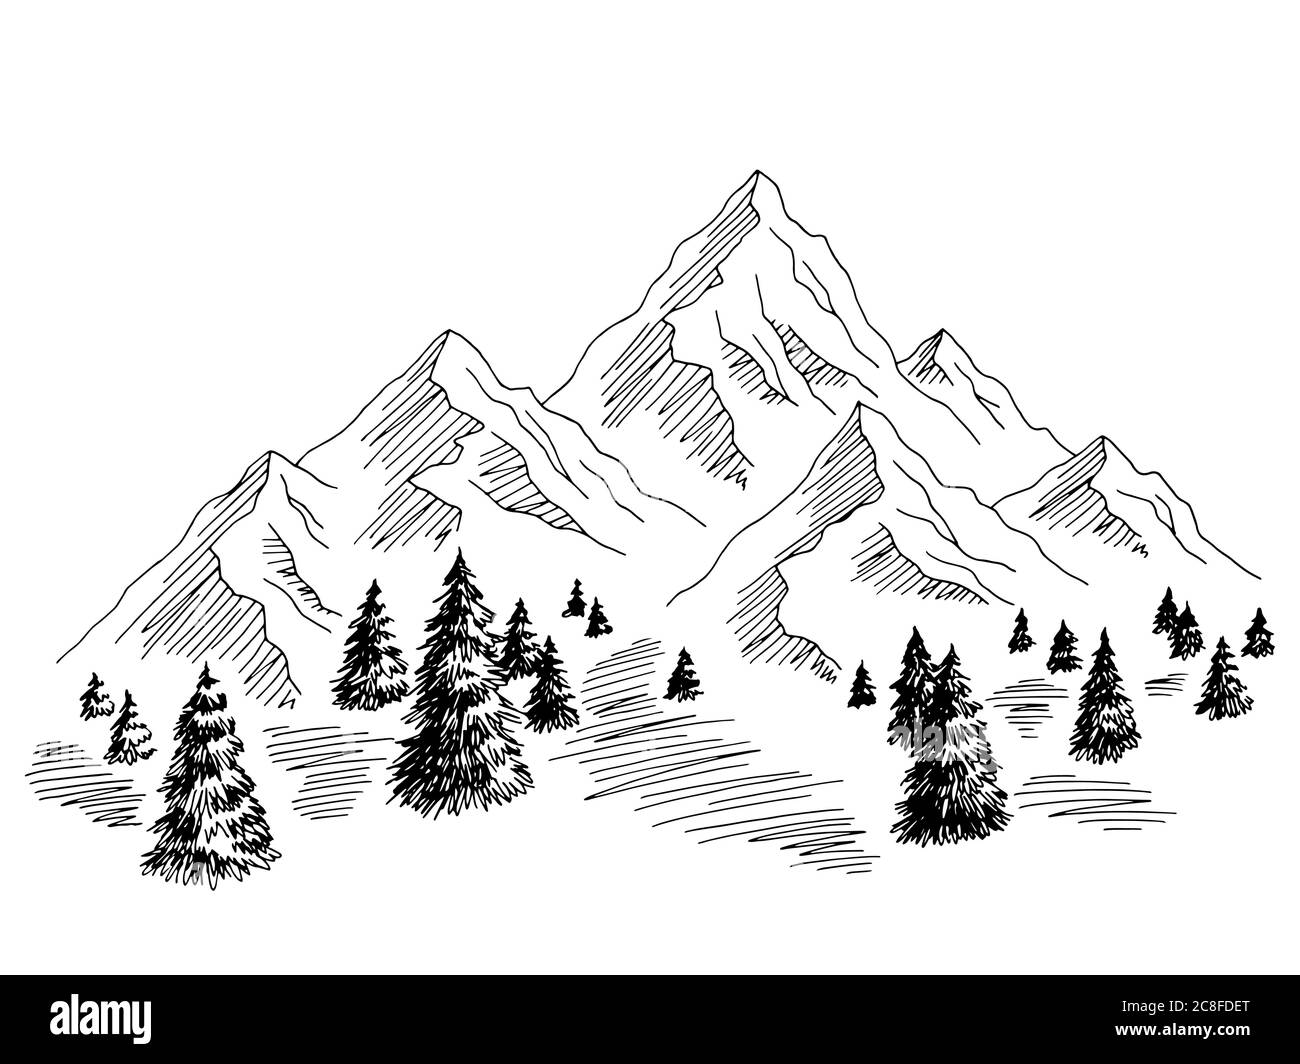 Mountains hill graphic black white landscape sketch illustration vector ...